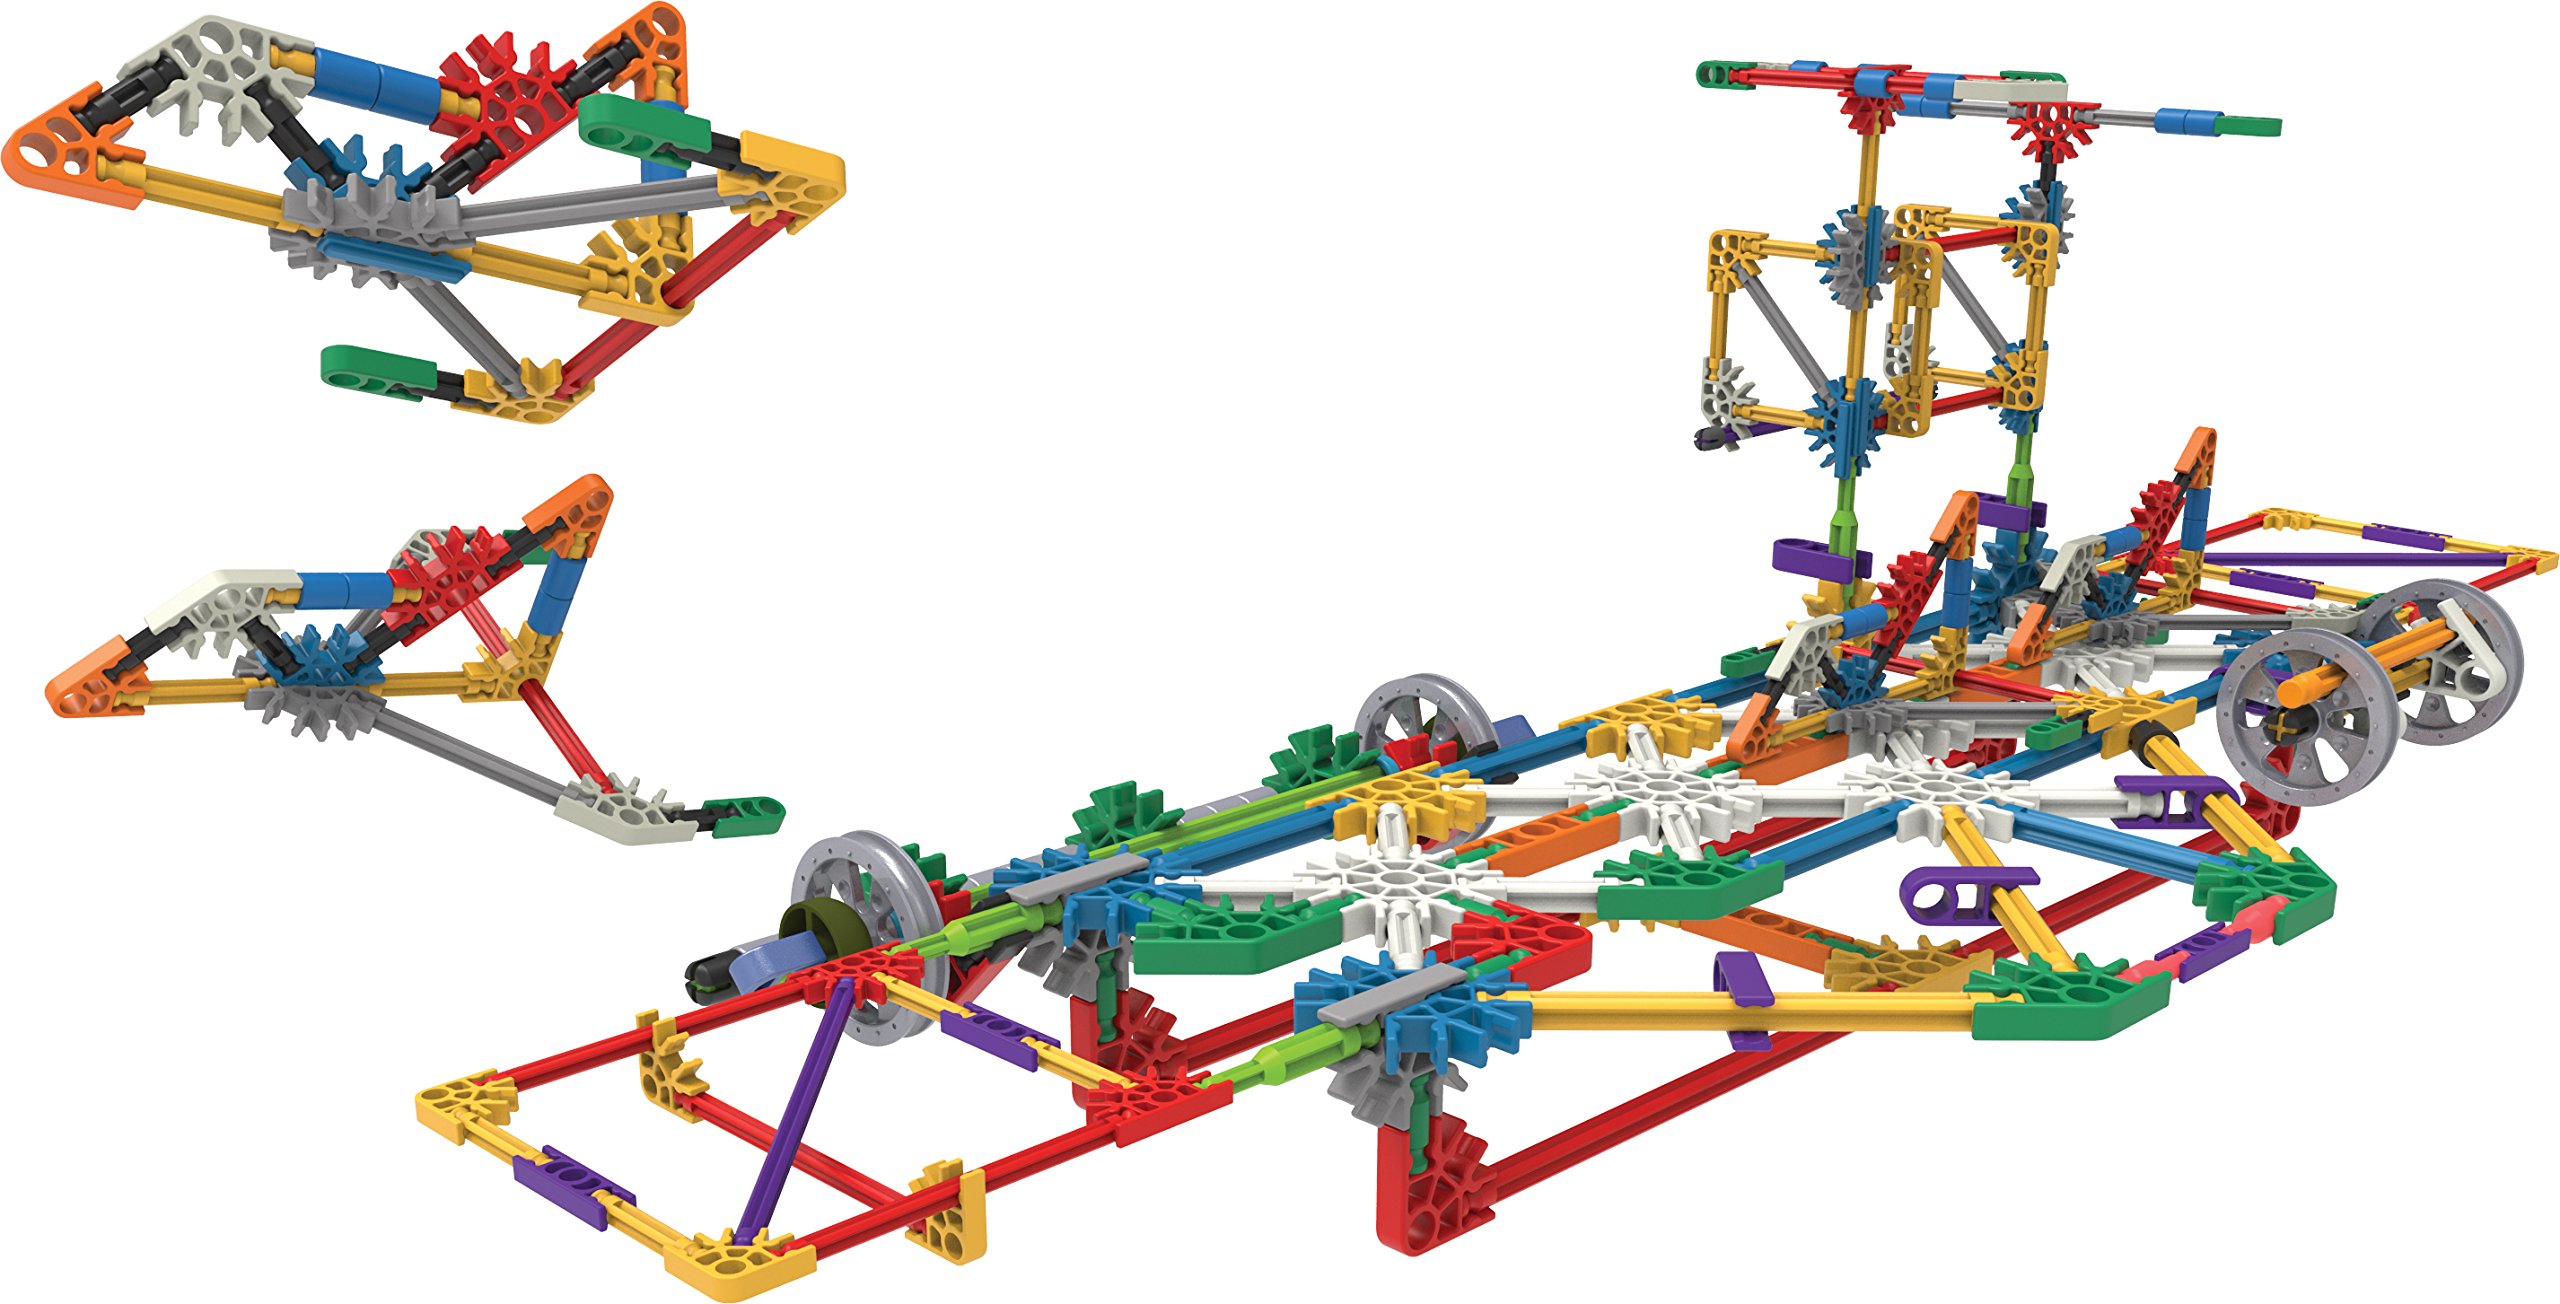 K'NEX Imagine - Click & Construct Value Building Set - 522Piece - 35 Models - Engineering Educational Toy